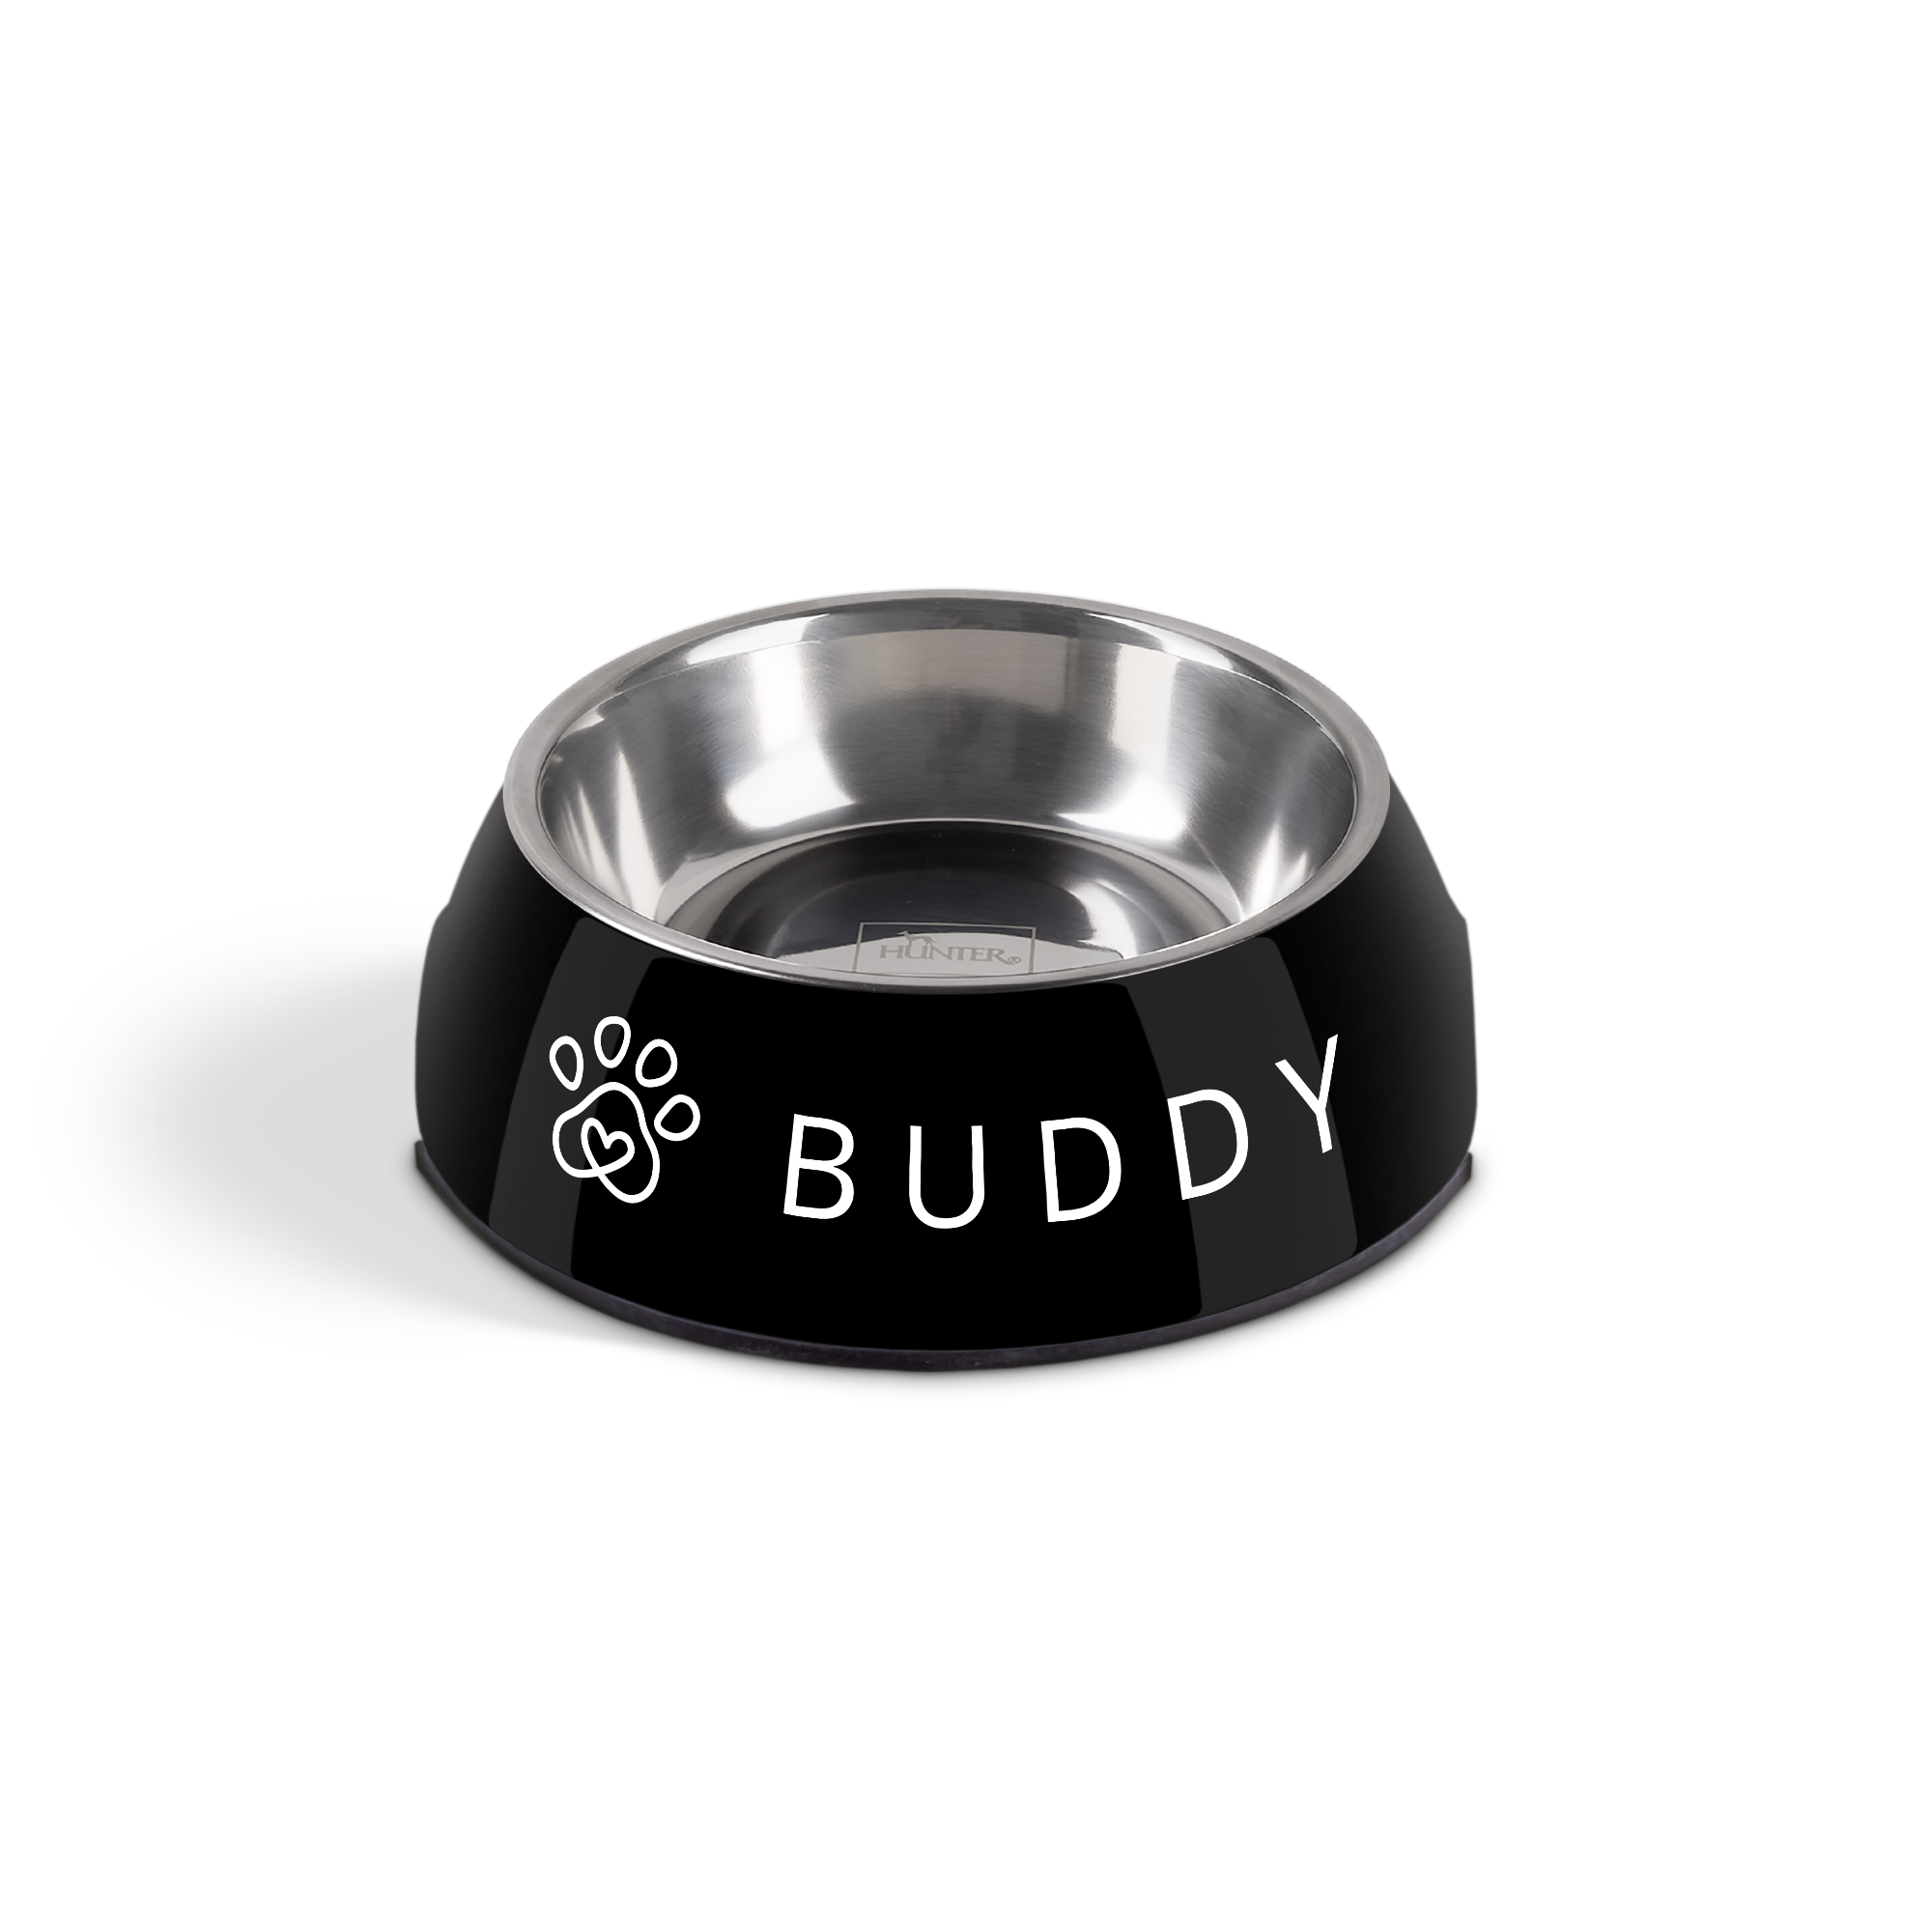 Personalised dog food bowl - Black - 160ml